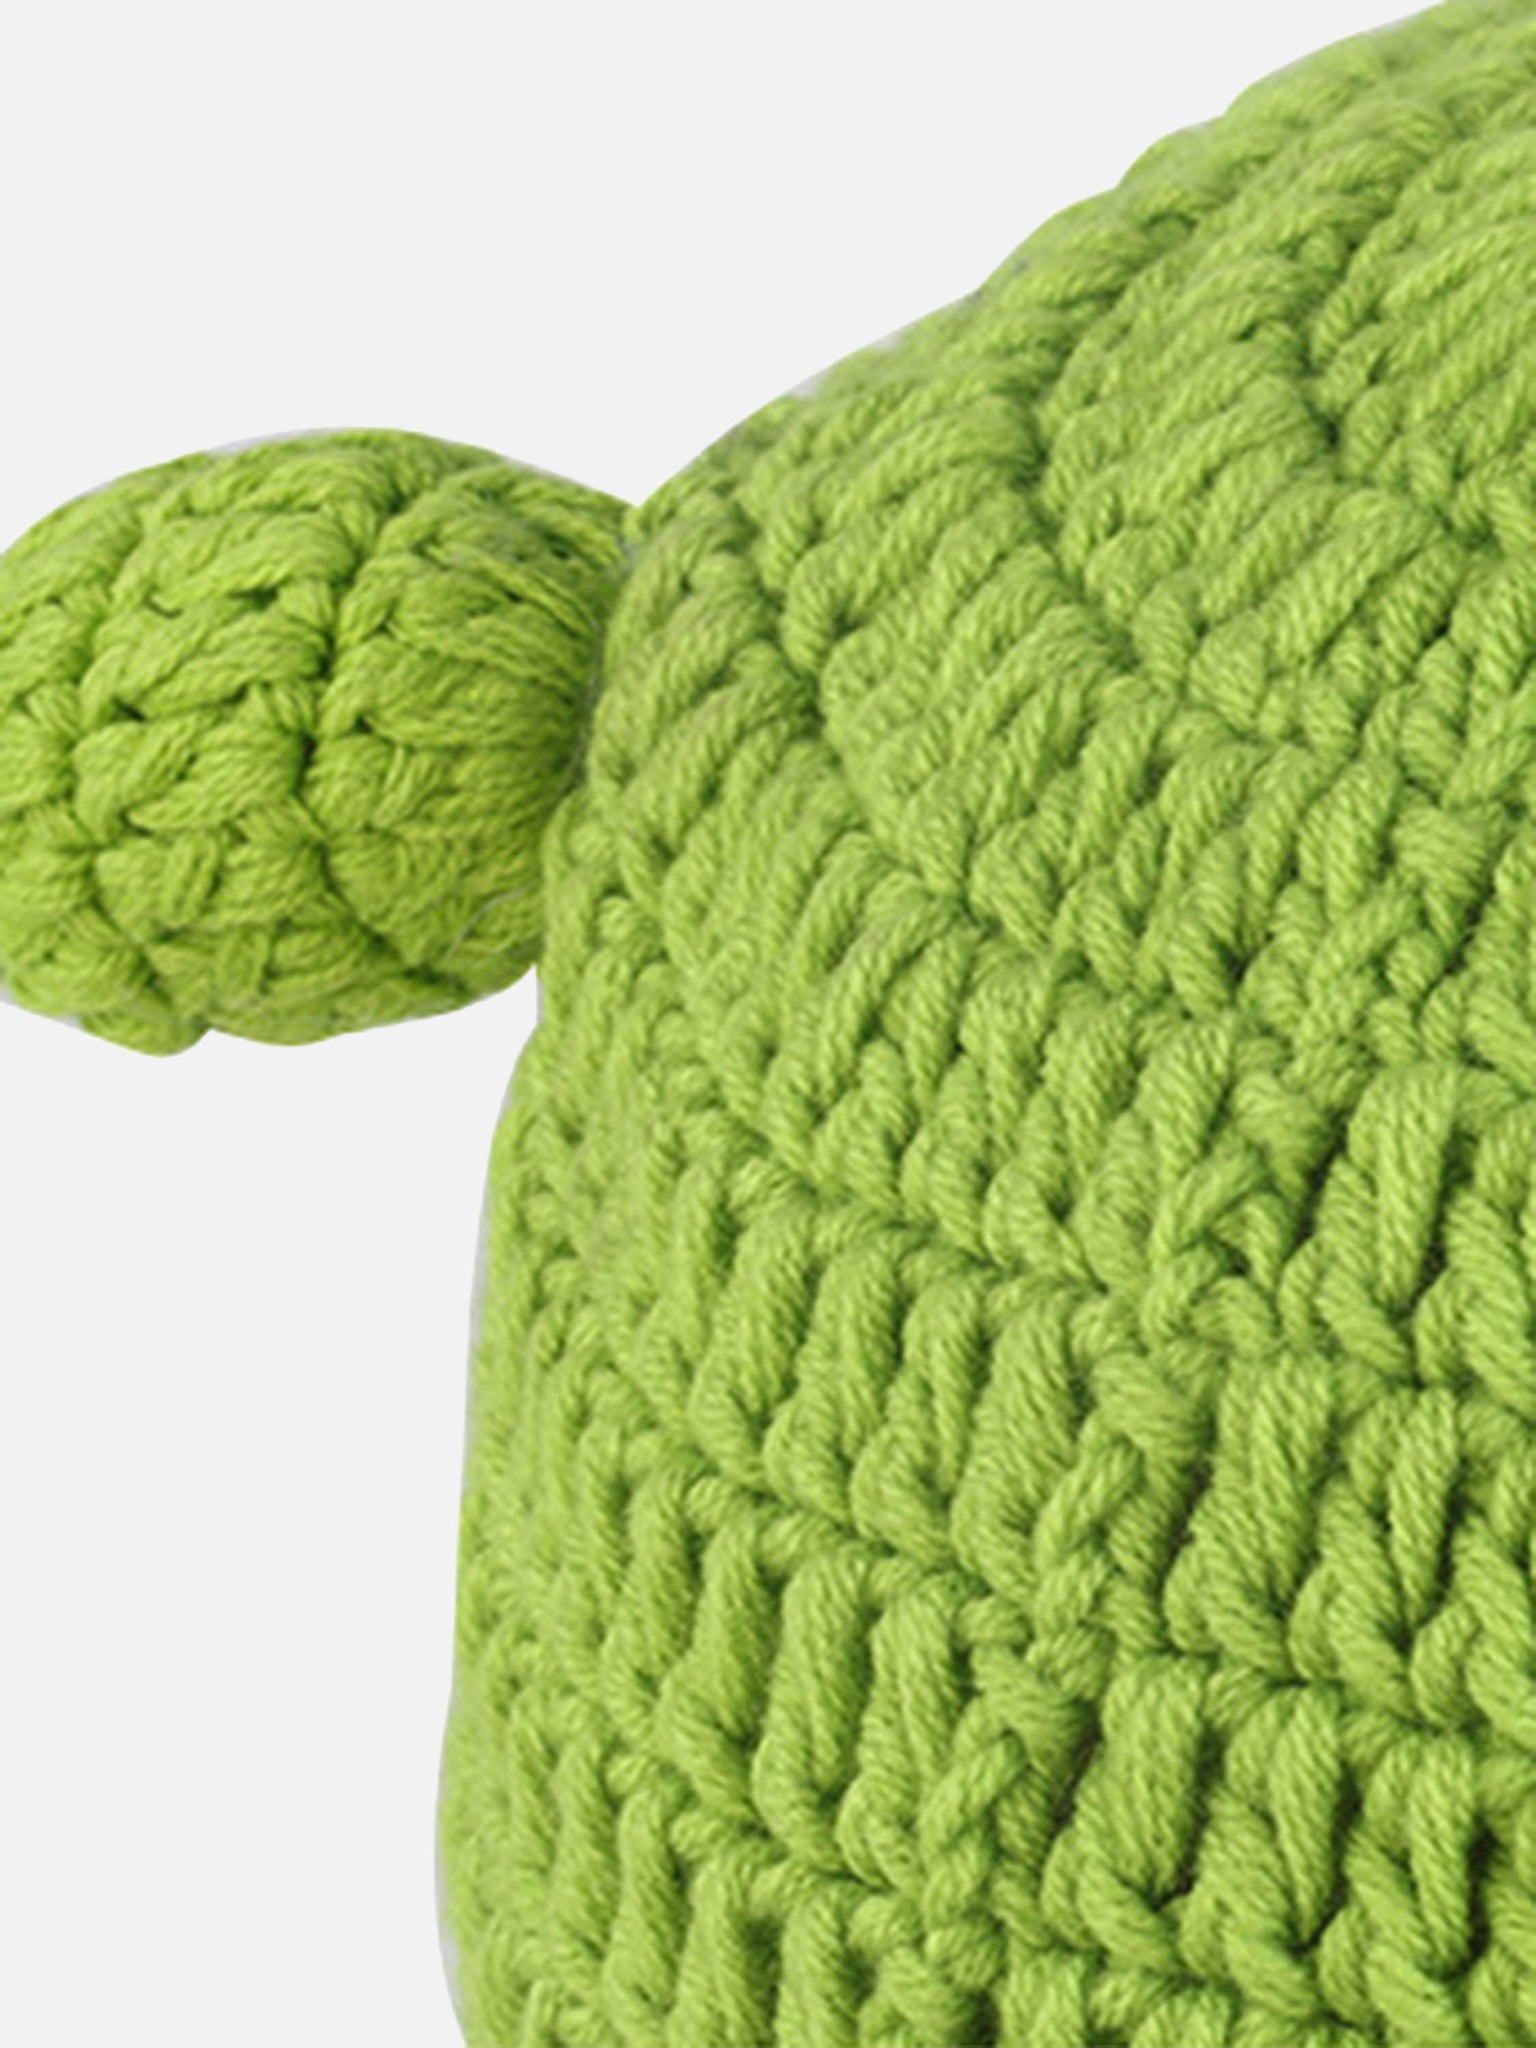 The Supermade Fashion Fun Hand Knitting Green Cartoon Head Cover Knitted Cap